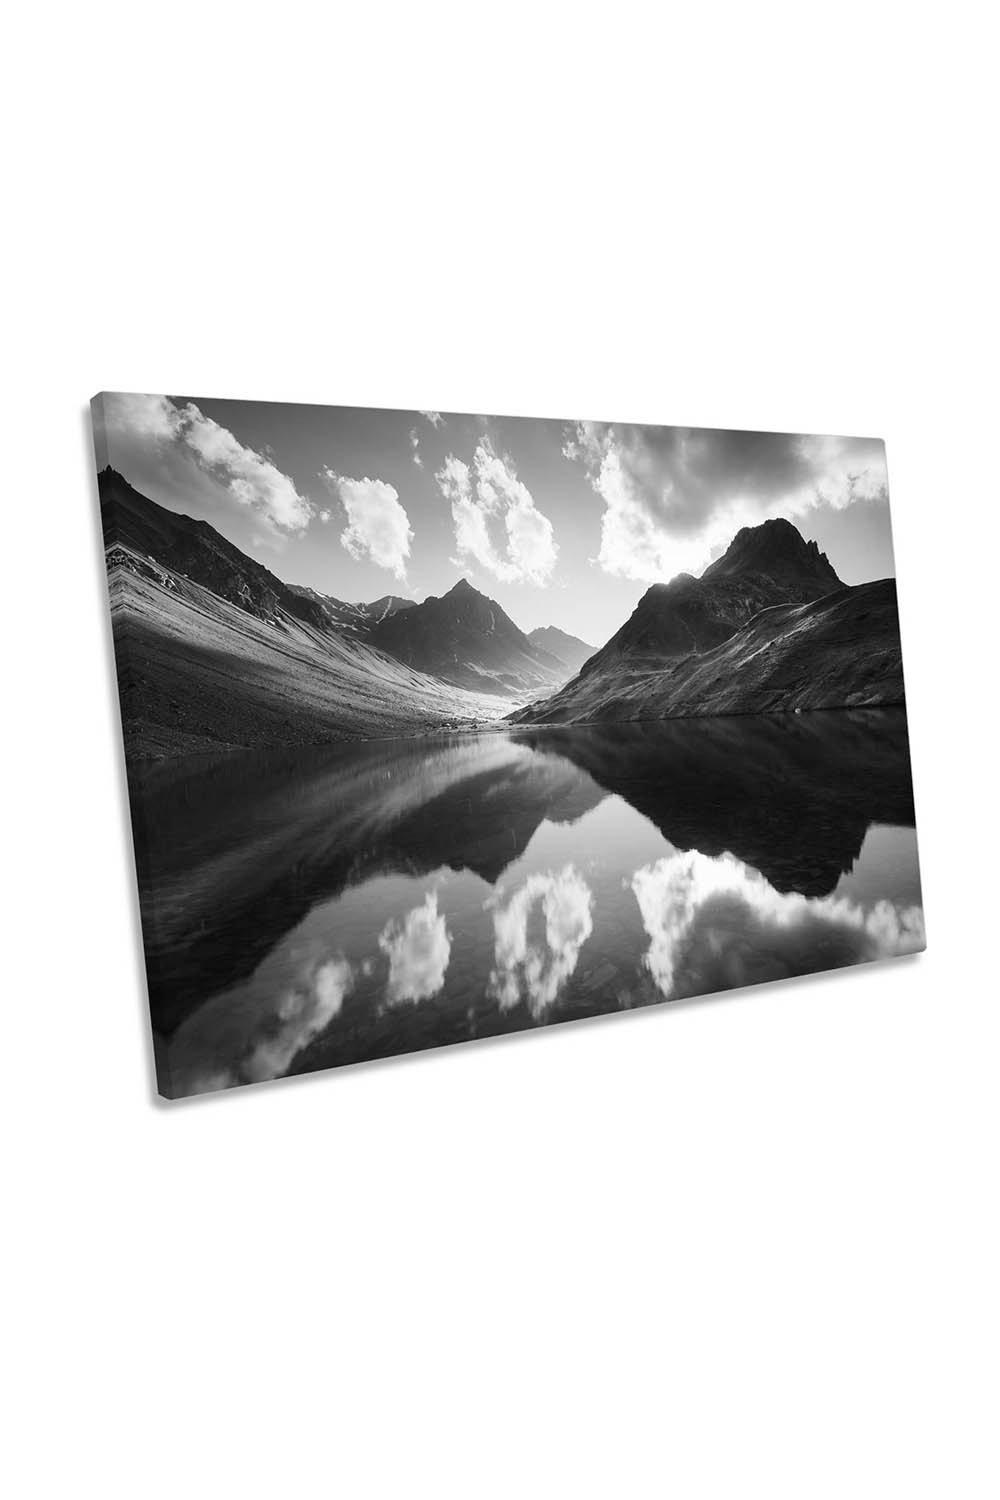 Mountain Reflection Switzerland Lake Canvas Wall Art Picture Print